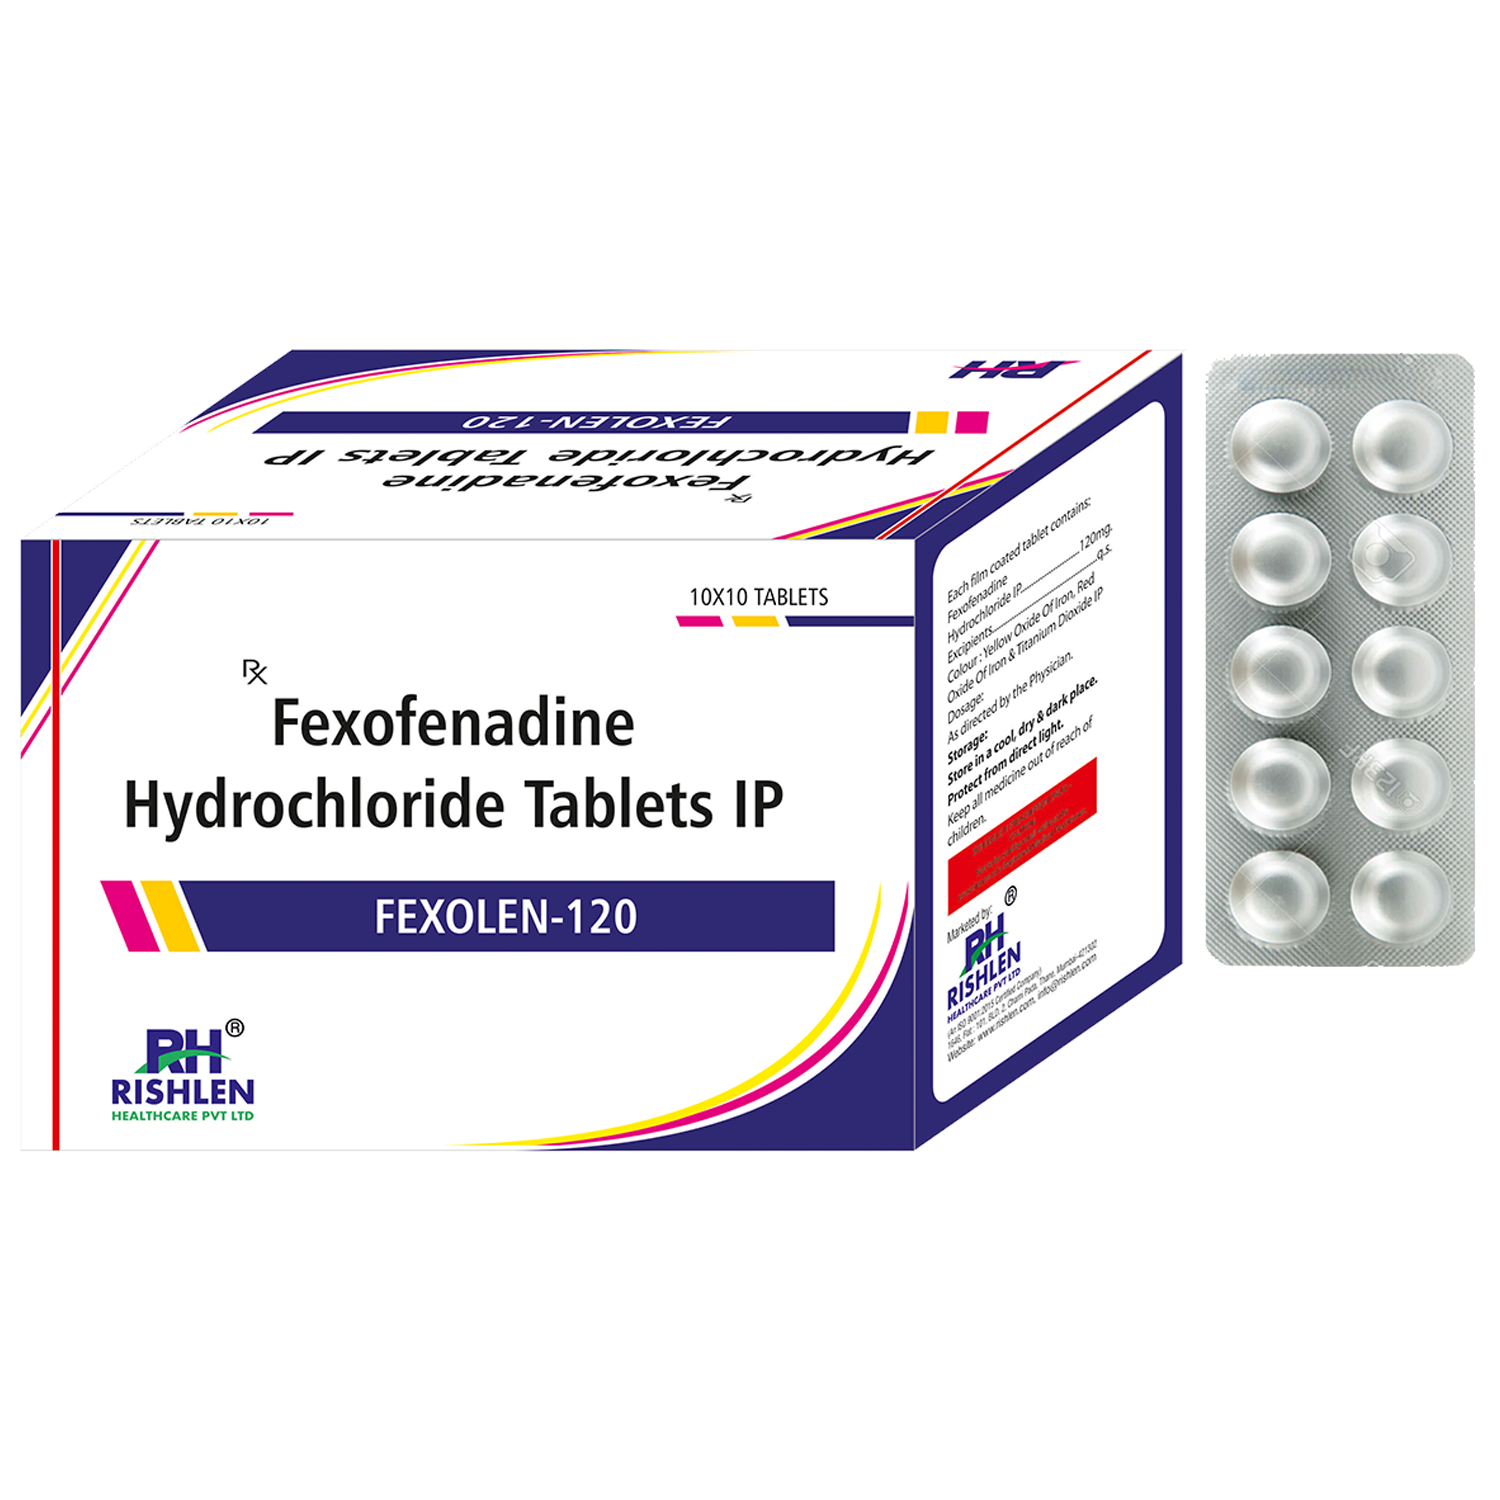 FEXOLEN-120, FEXOFEN, FEXOPEN-120, Fexofenadine 120mg/180mg, Faxoleen, Fexopen, Fexopill, Fexofenadine, Fexoll, Fexolen, Fexofenadine, Phenethyl ferulate, Fexofenadine, Labyrinthine